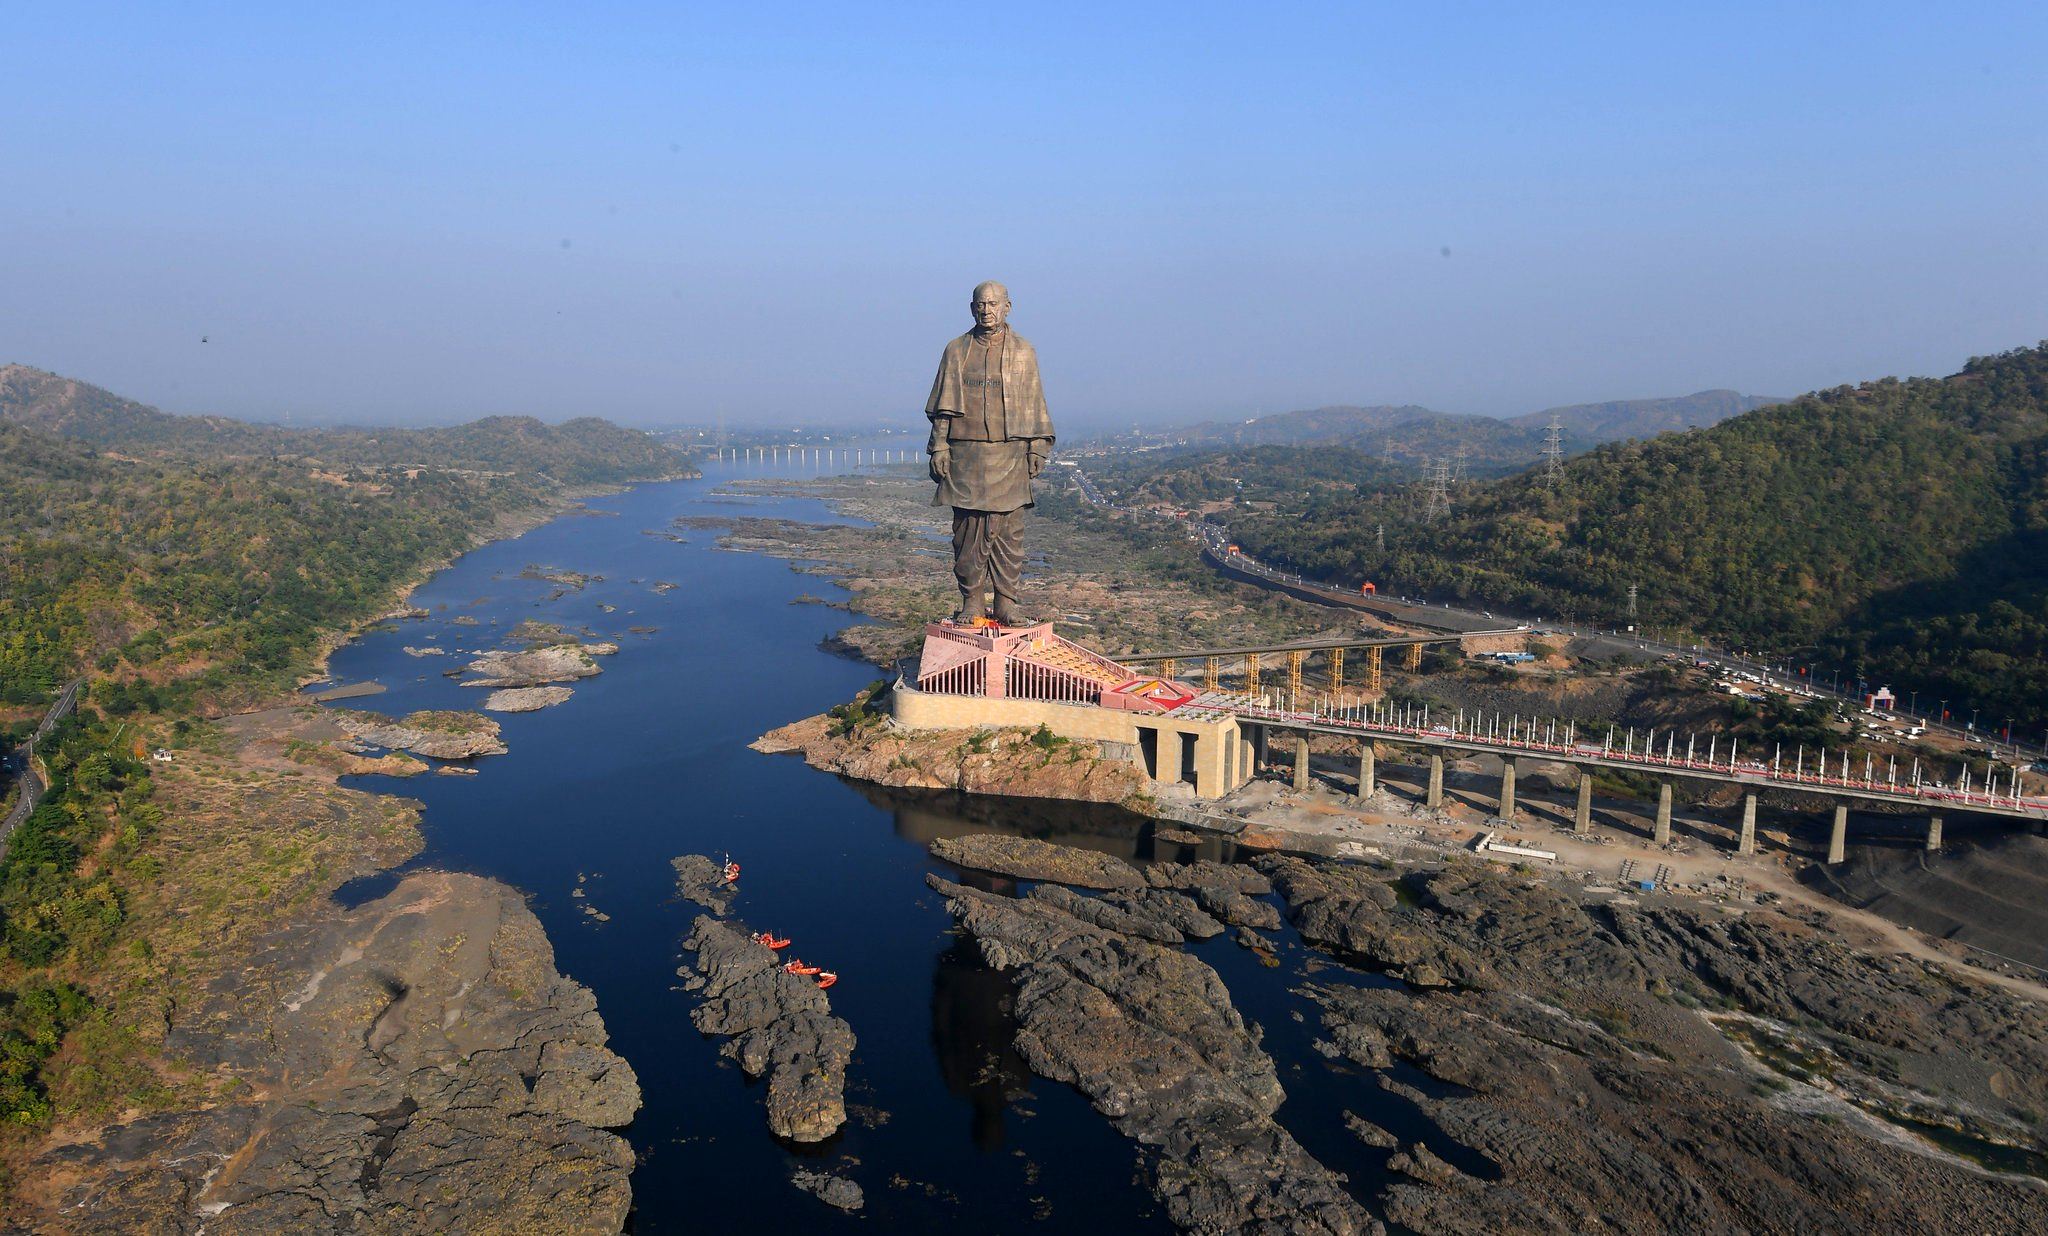 2048x1236, 435 Kb / Индия, река, статуя единства